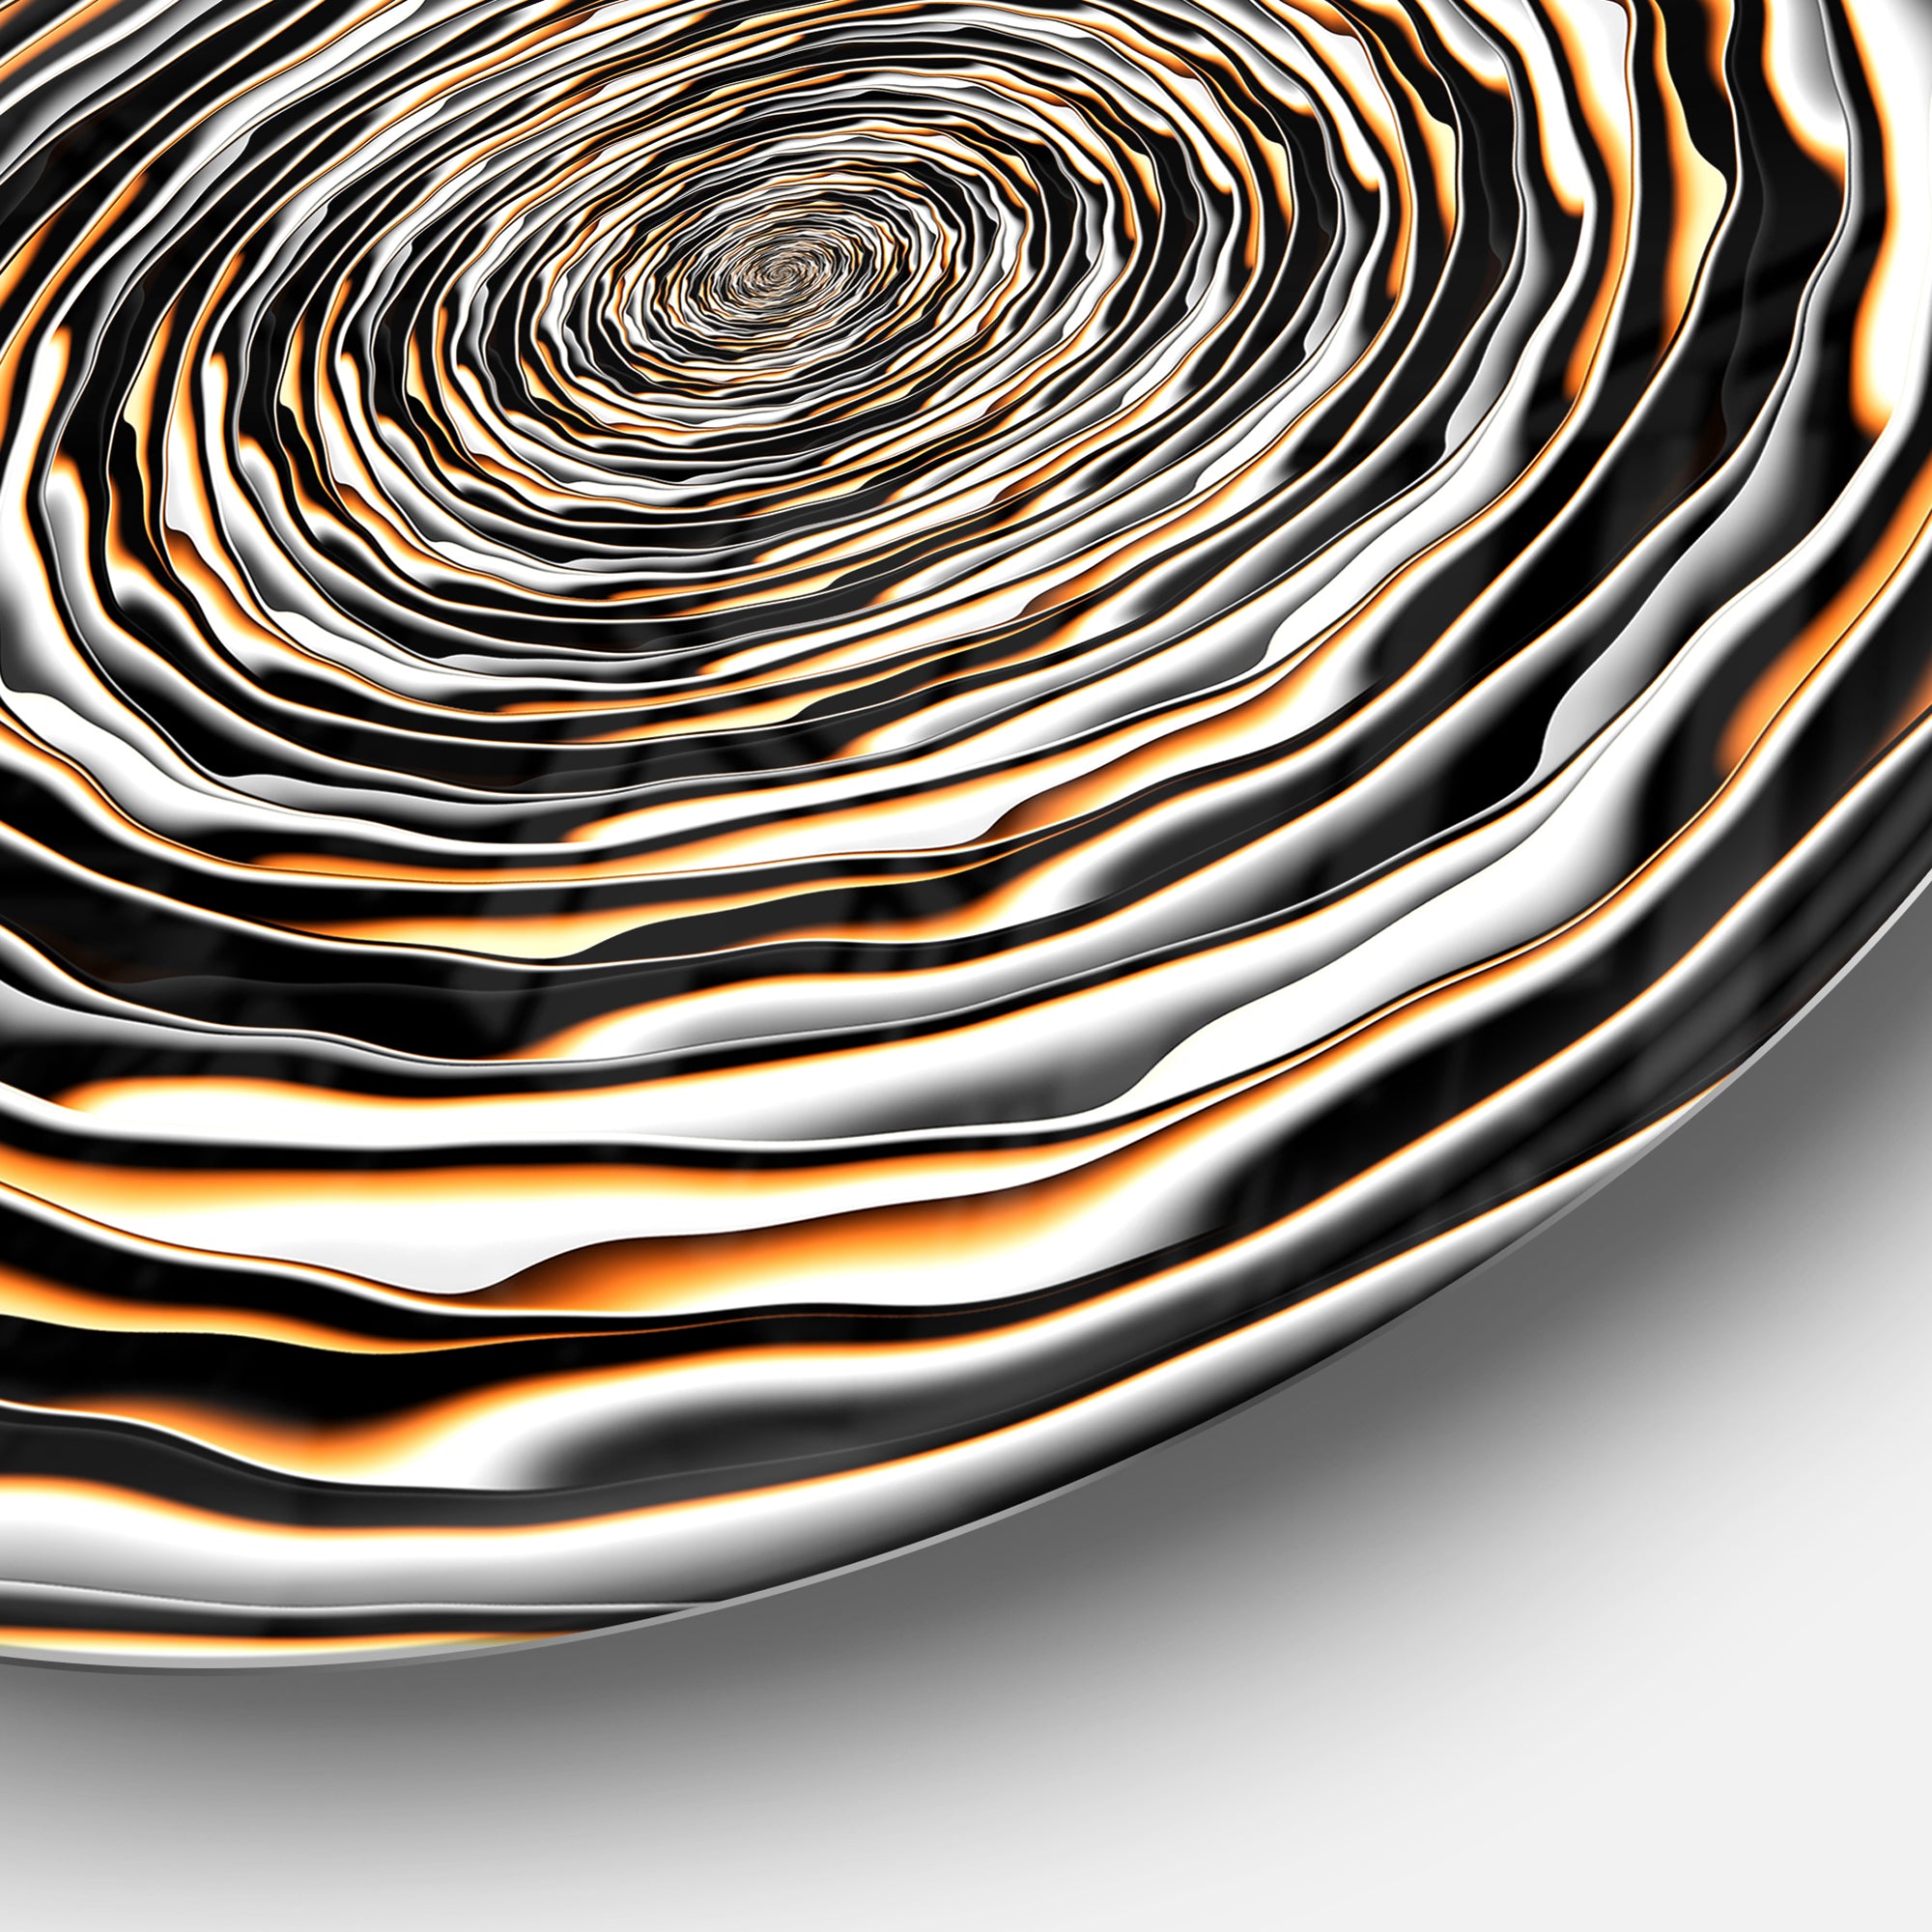 Fractal Rotating Abstract Design' Large Abstract Metal Artwork